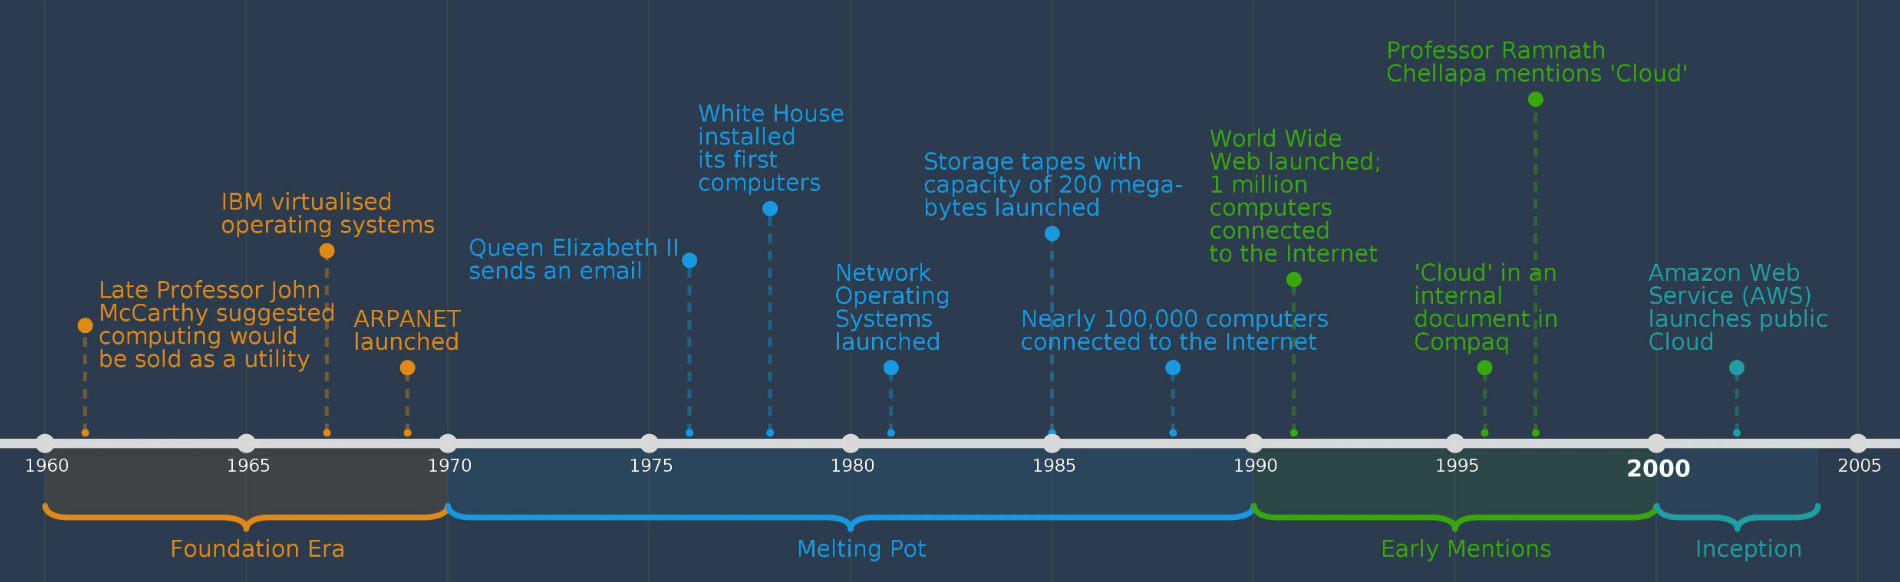 Timeline of cloud computing